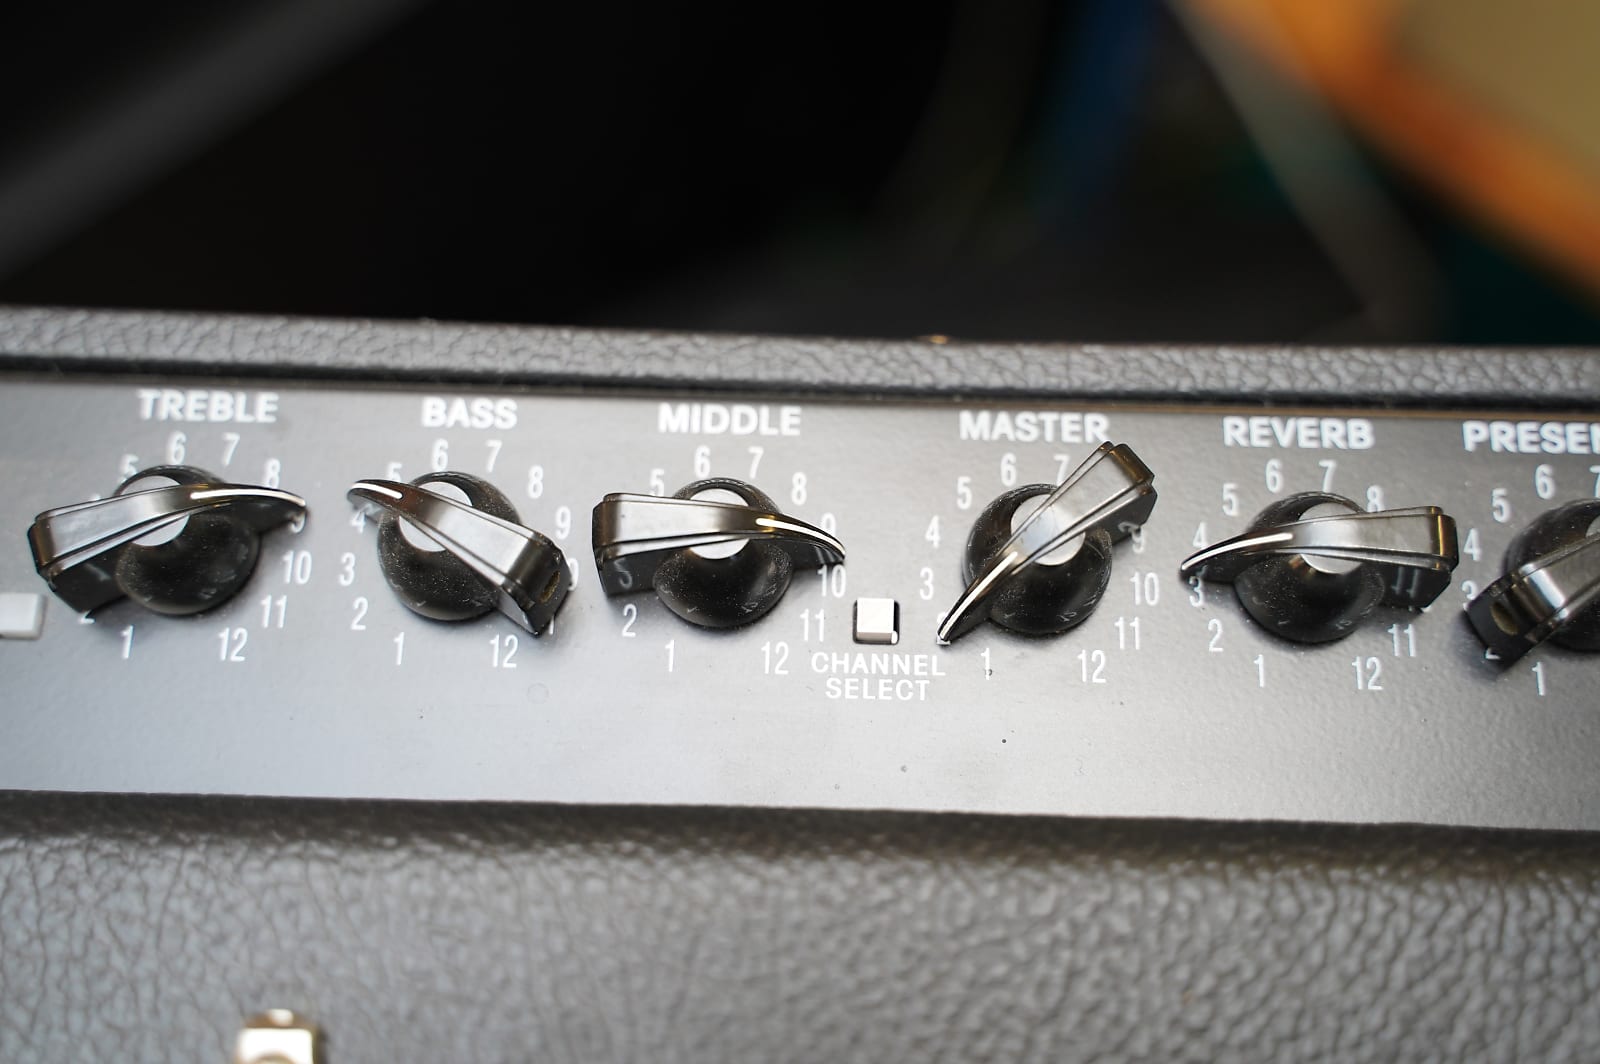 Fender Hot Rod Deville III 212 Combo on OhGuitar.com